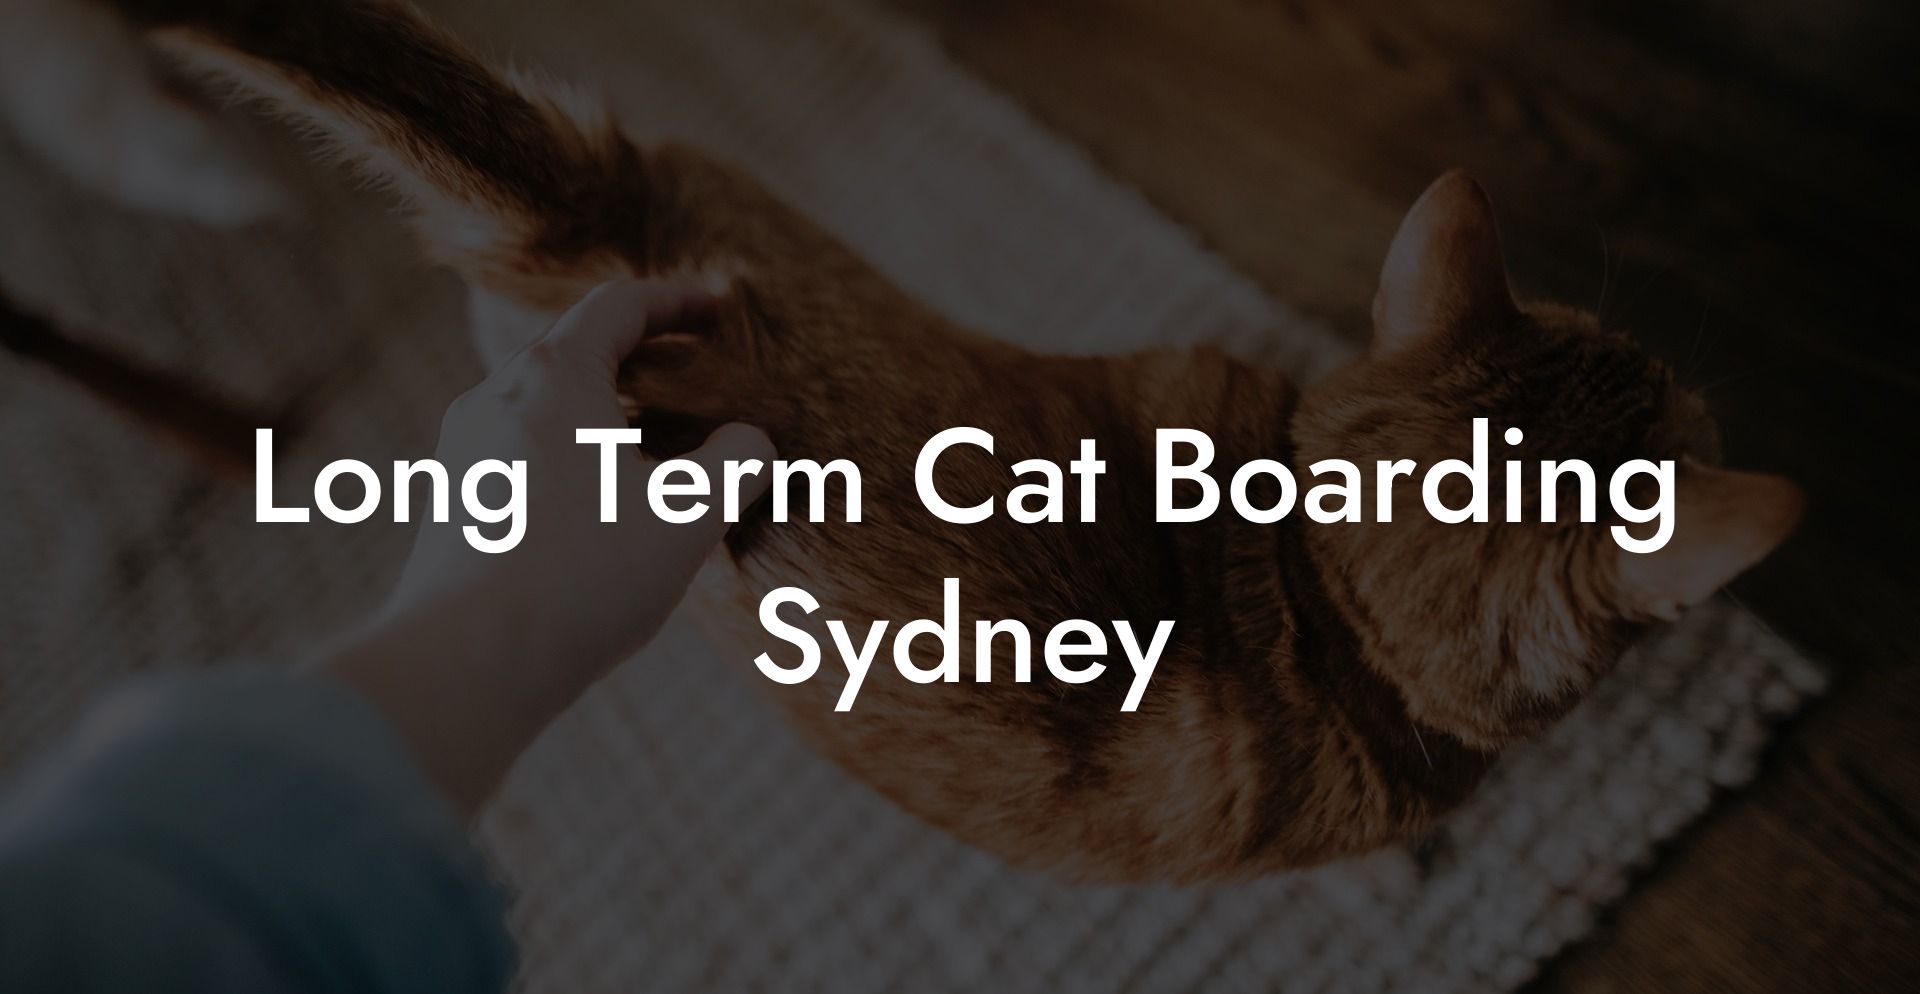 Long Term Cat Boarding Sydney